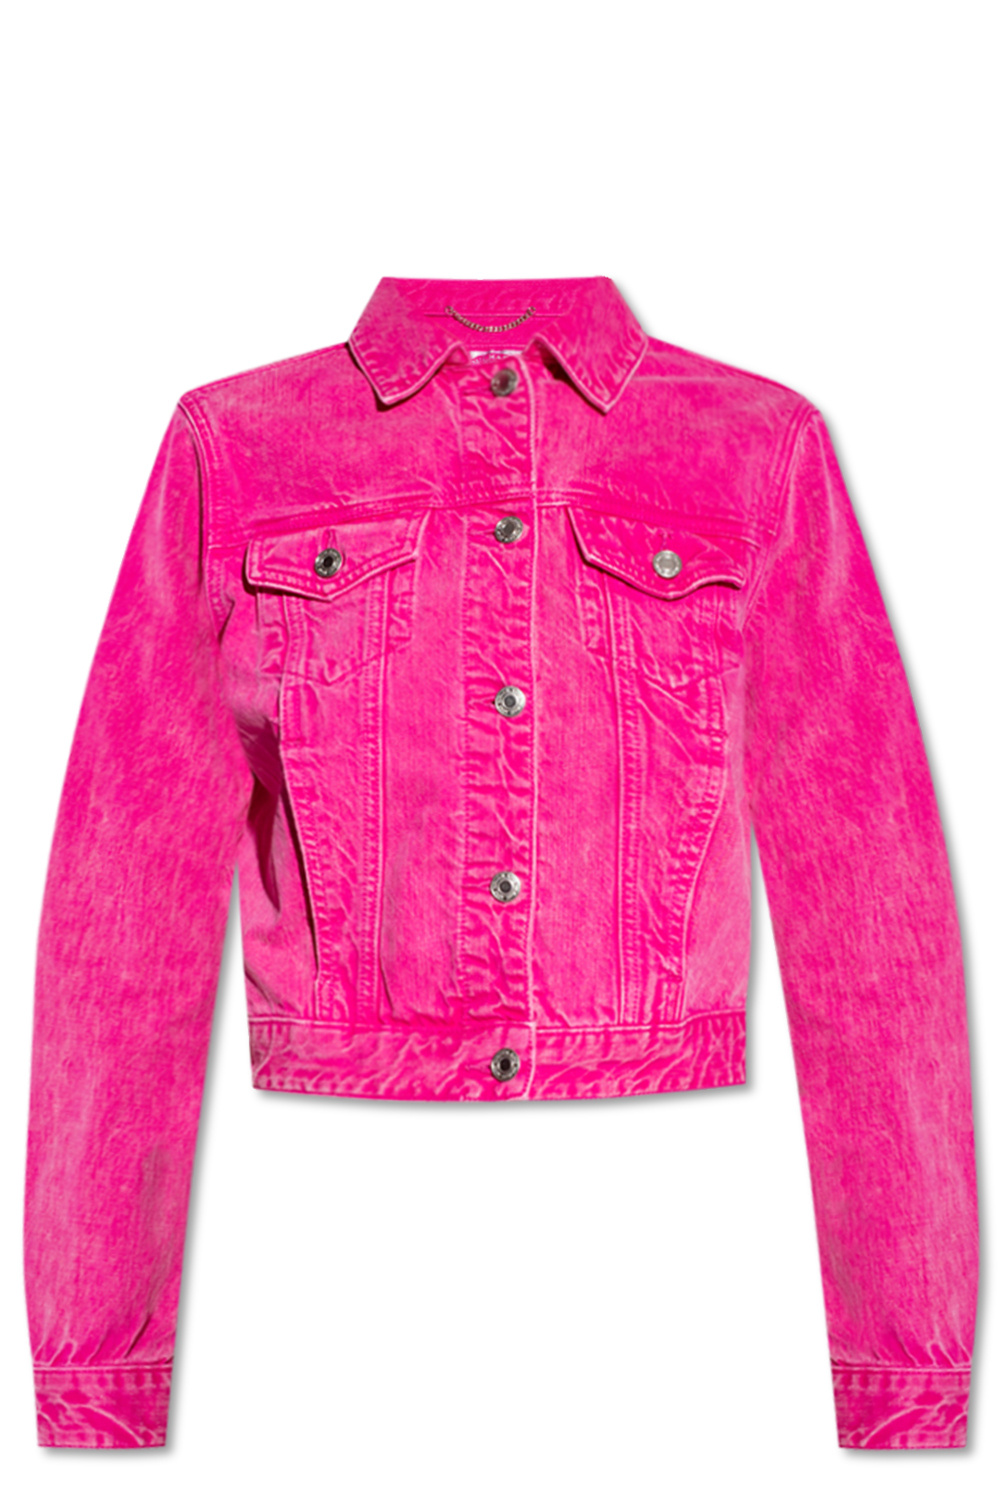 miss blumarine applique bear sweatshirt item | Women's Clothing | Michael  Michael Kors Denim off jacket | IetpShops